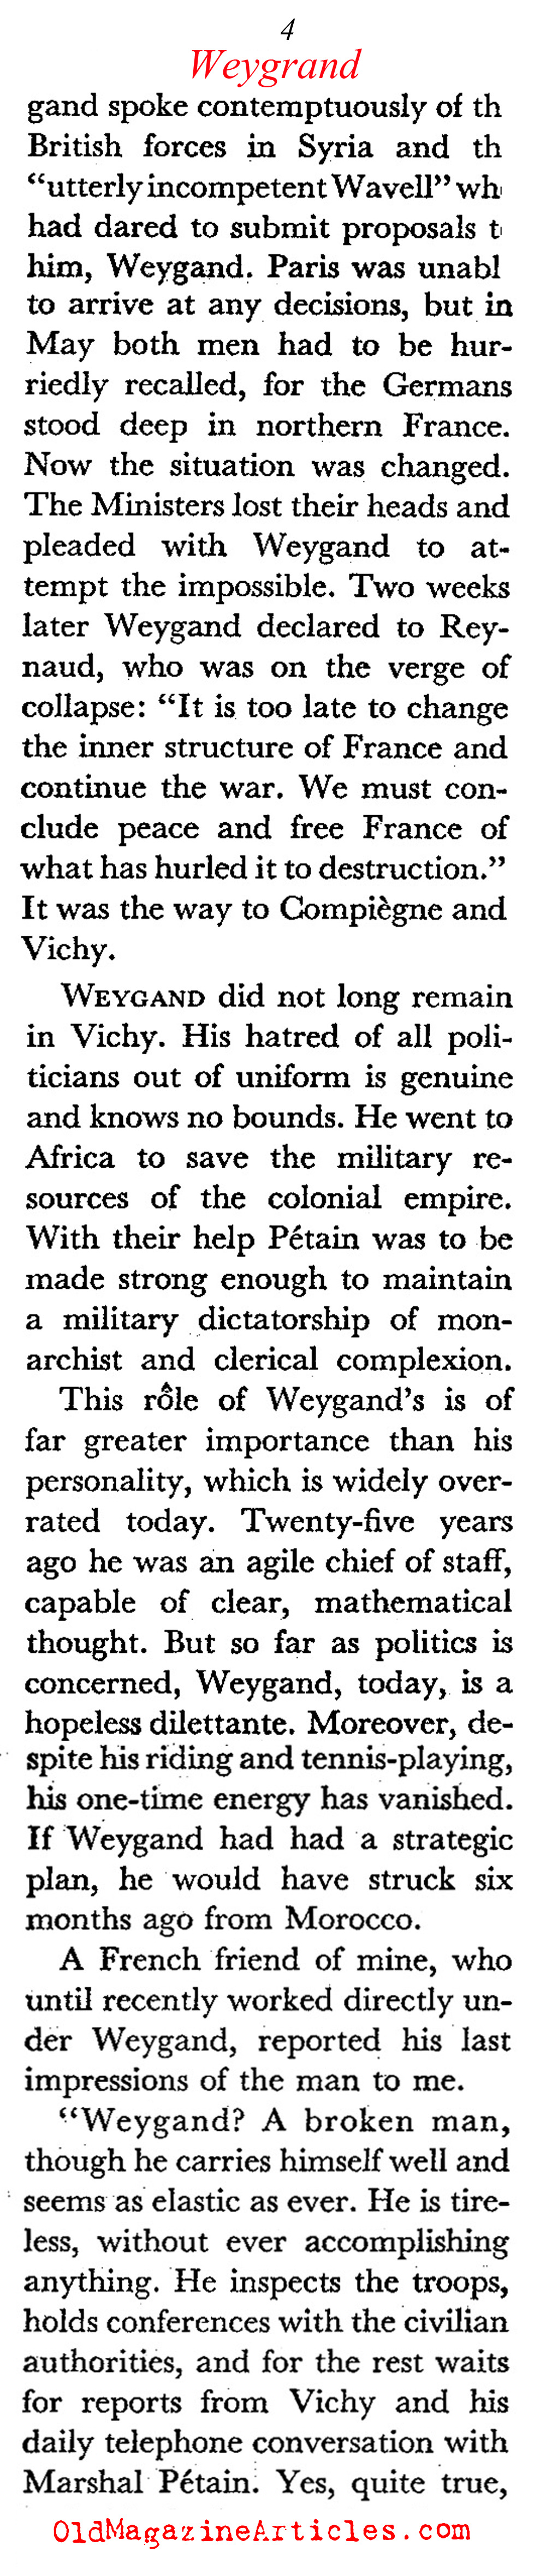 The General Who Failed France (Coronet Magazine, 1941)